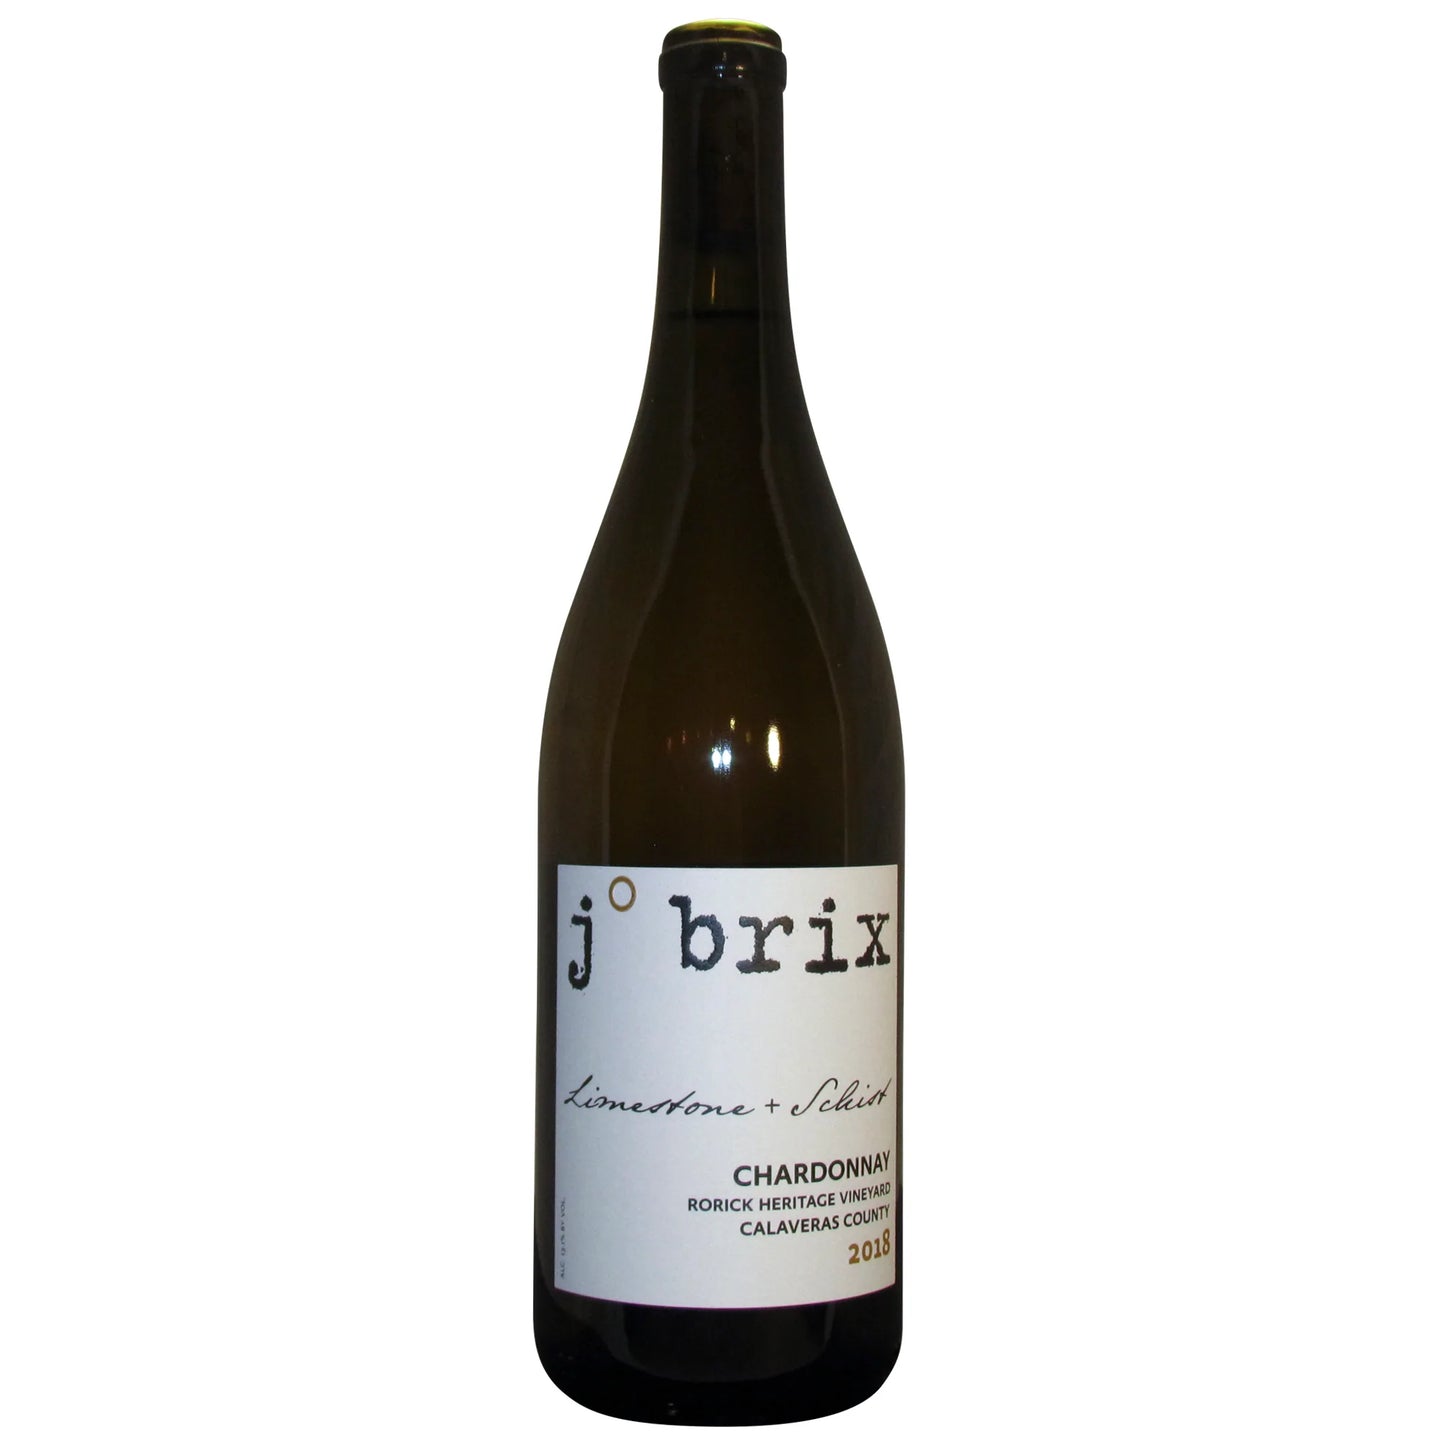 J. Brix -- Limestone & Schist Chardonnay